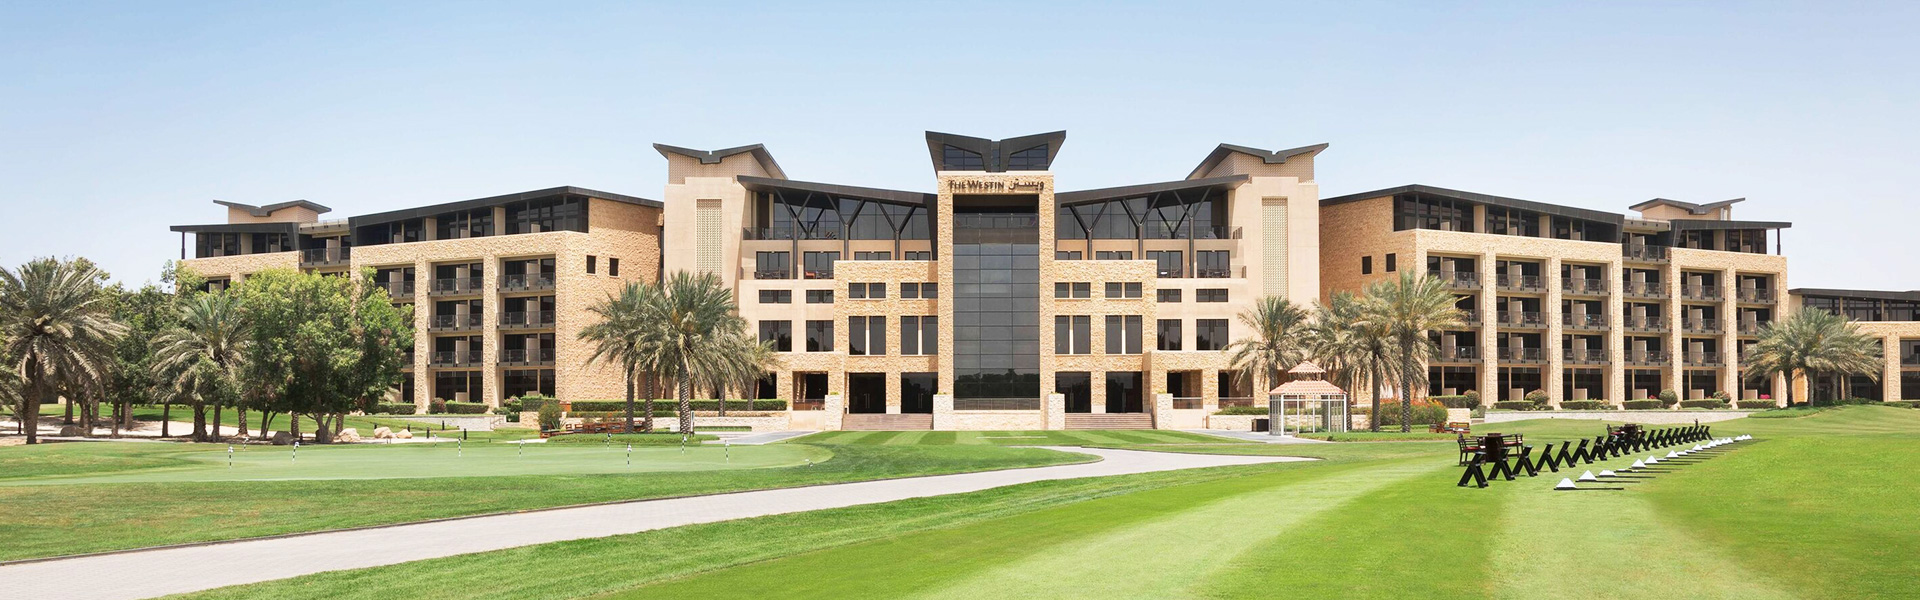 Bilyana Golf - The Westin Abu Dhabi Golf Resort and Spa